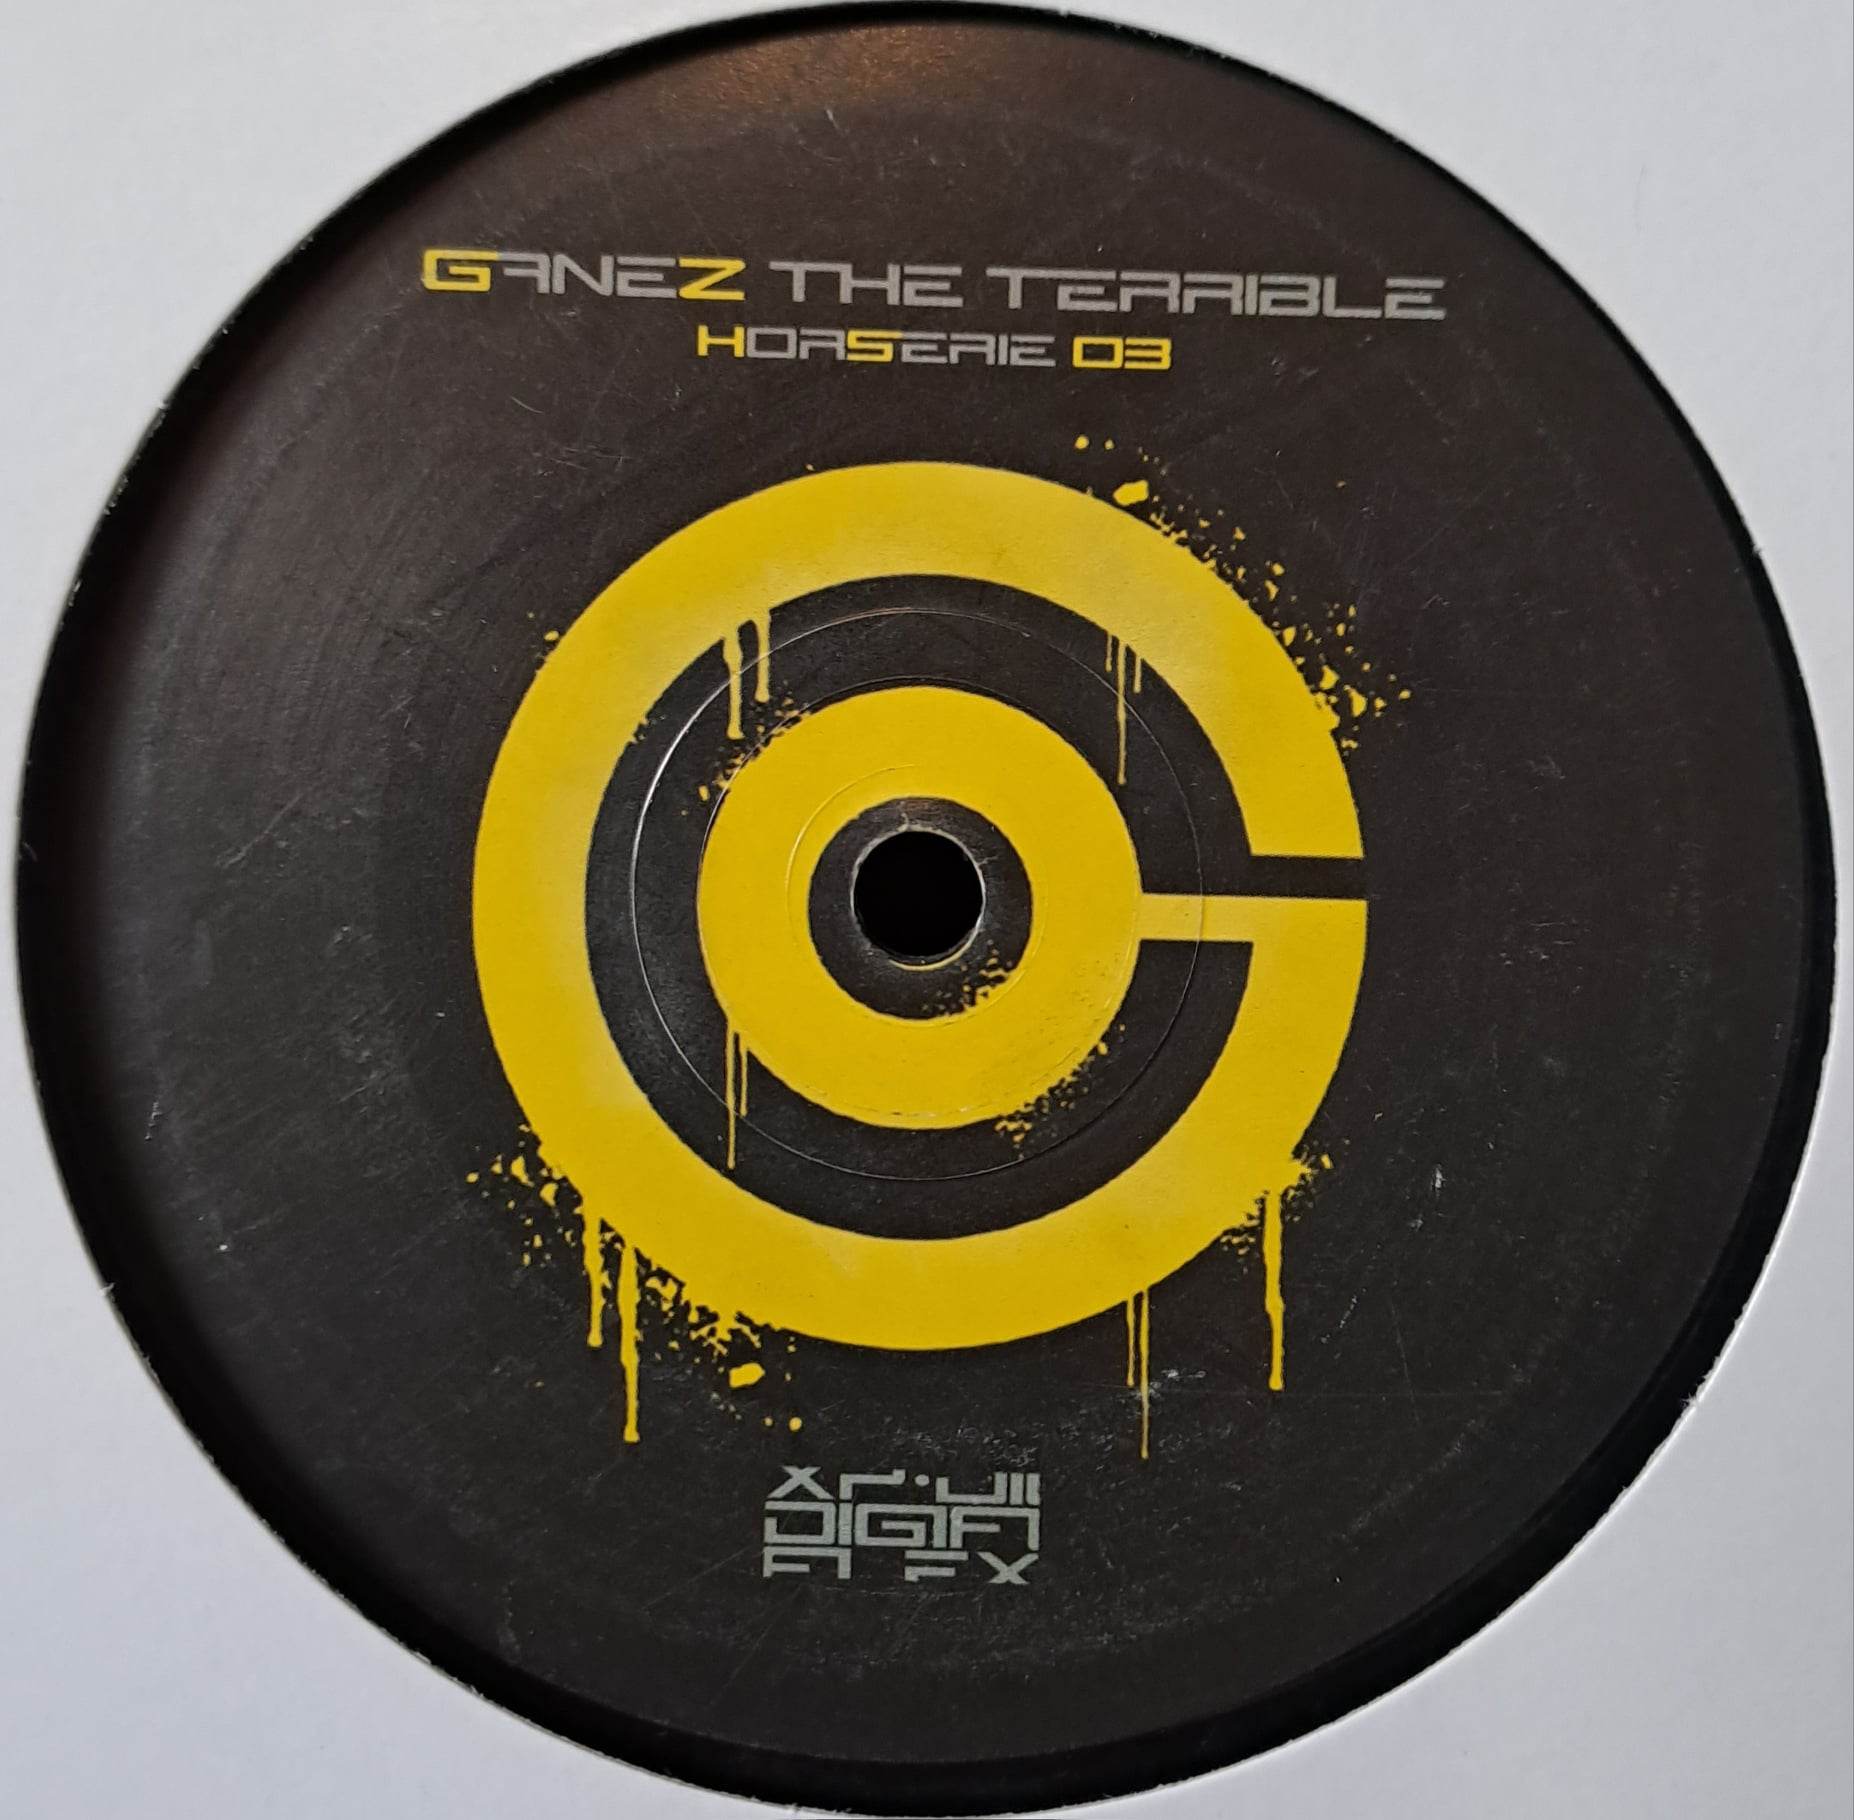 Ganez The Terrible Horserie 03 - vinyle acid